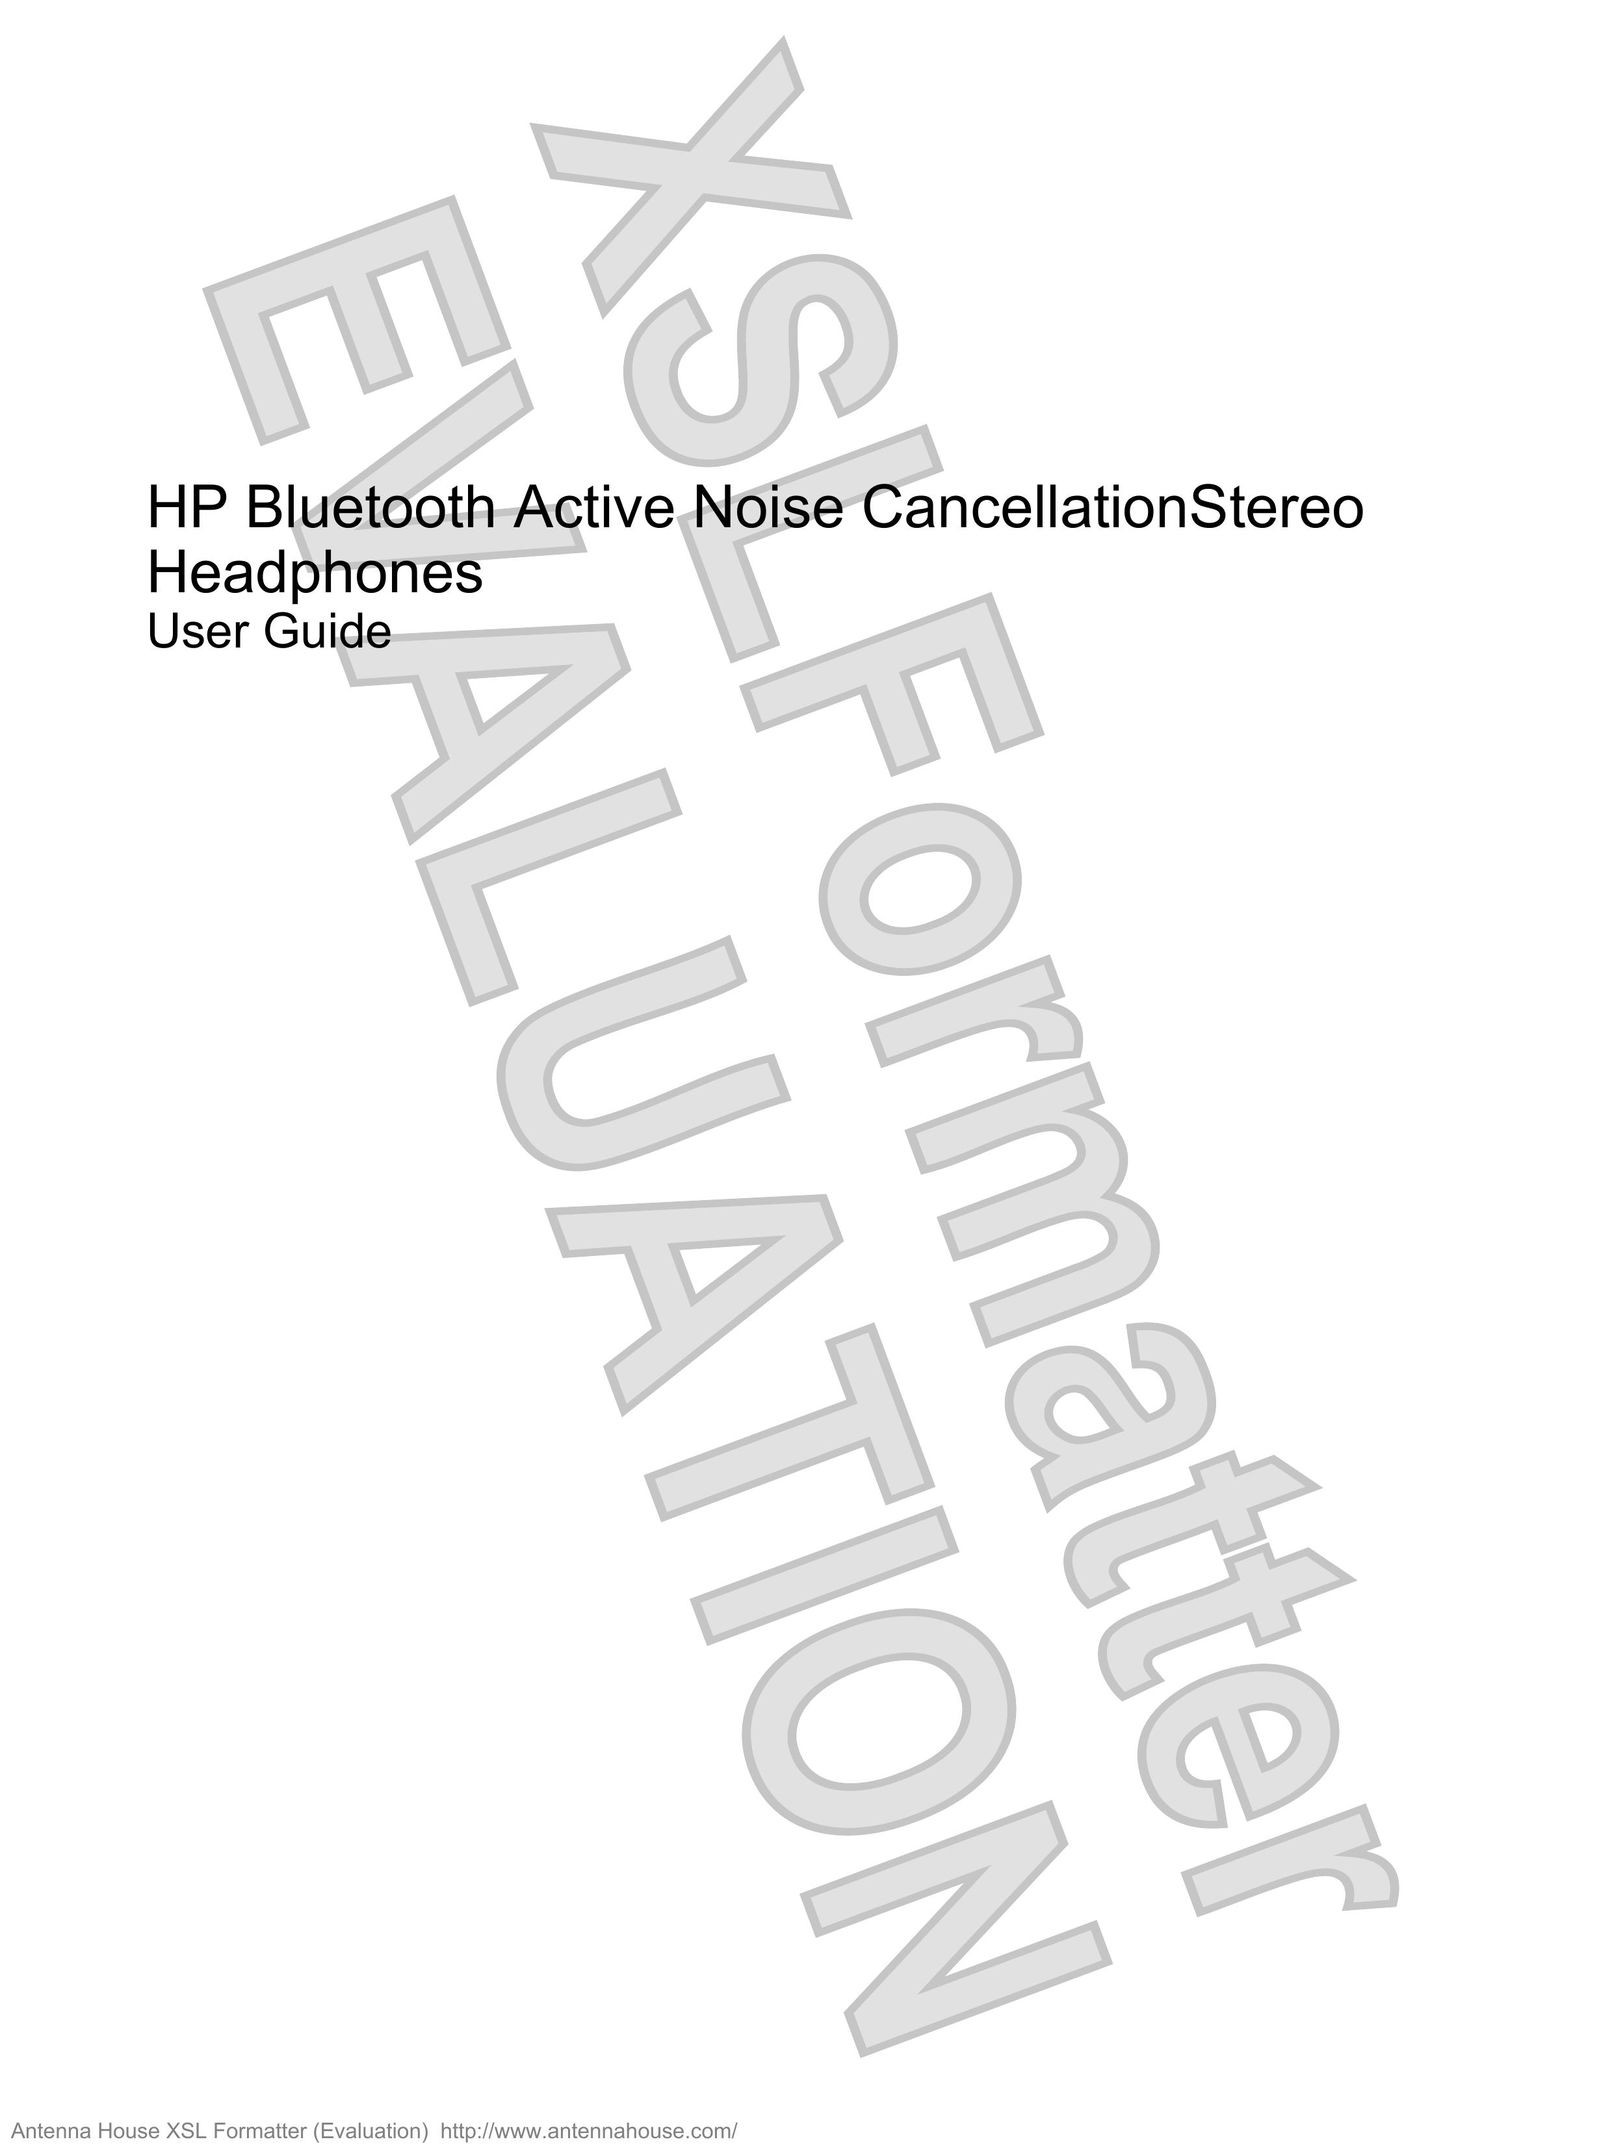 HP (Hewlett-Packard) Bluetooth Active Noise Cancellation Stereo Headphones Headphones User Manual